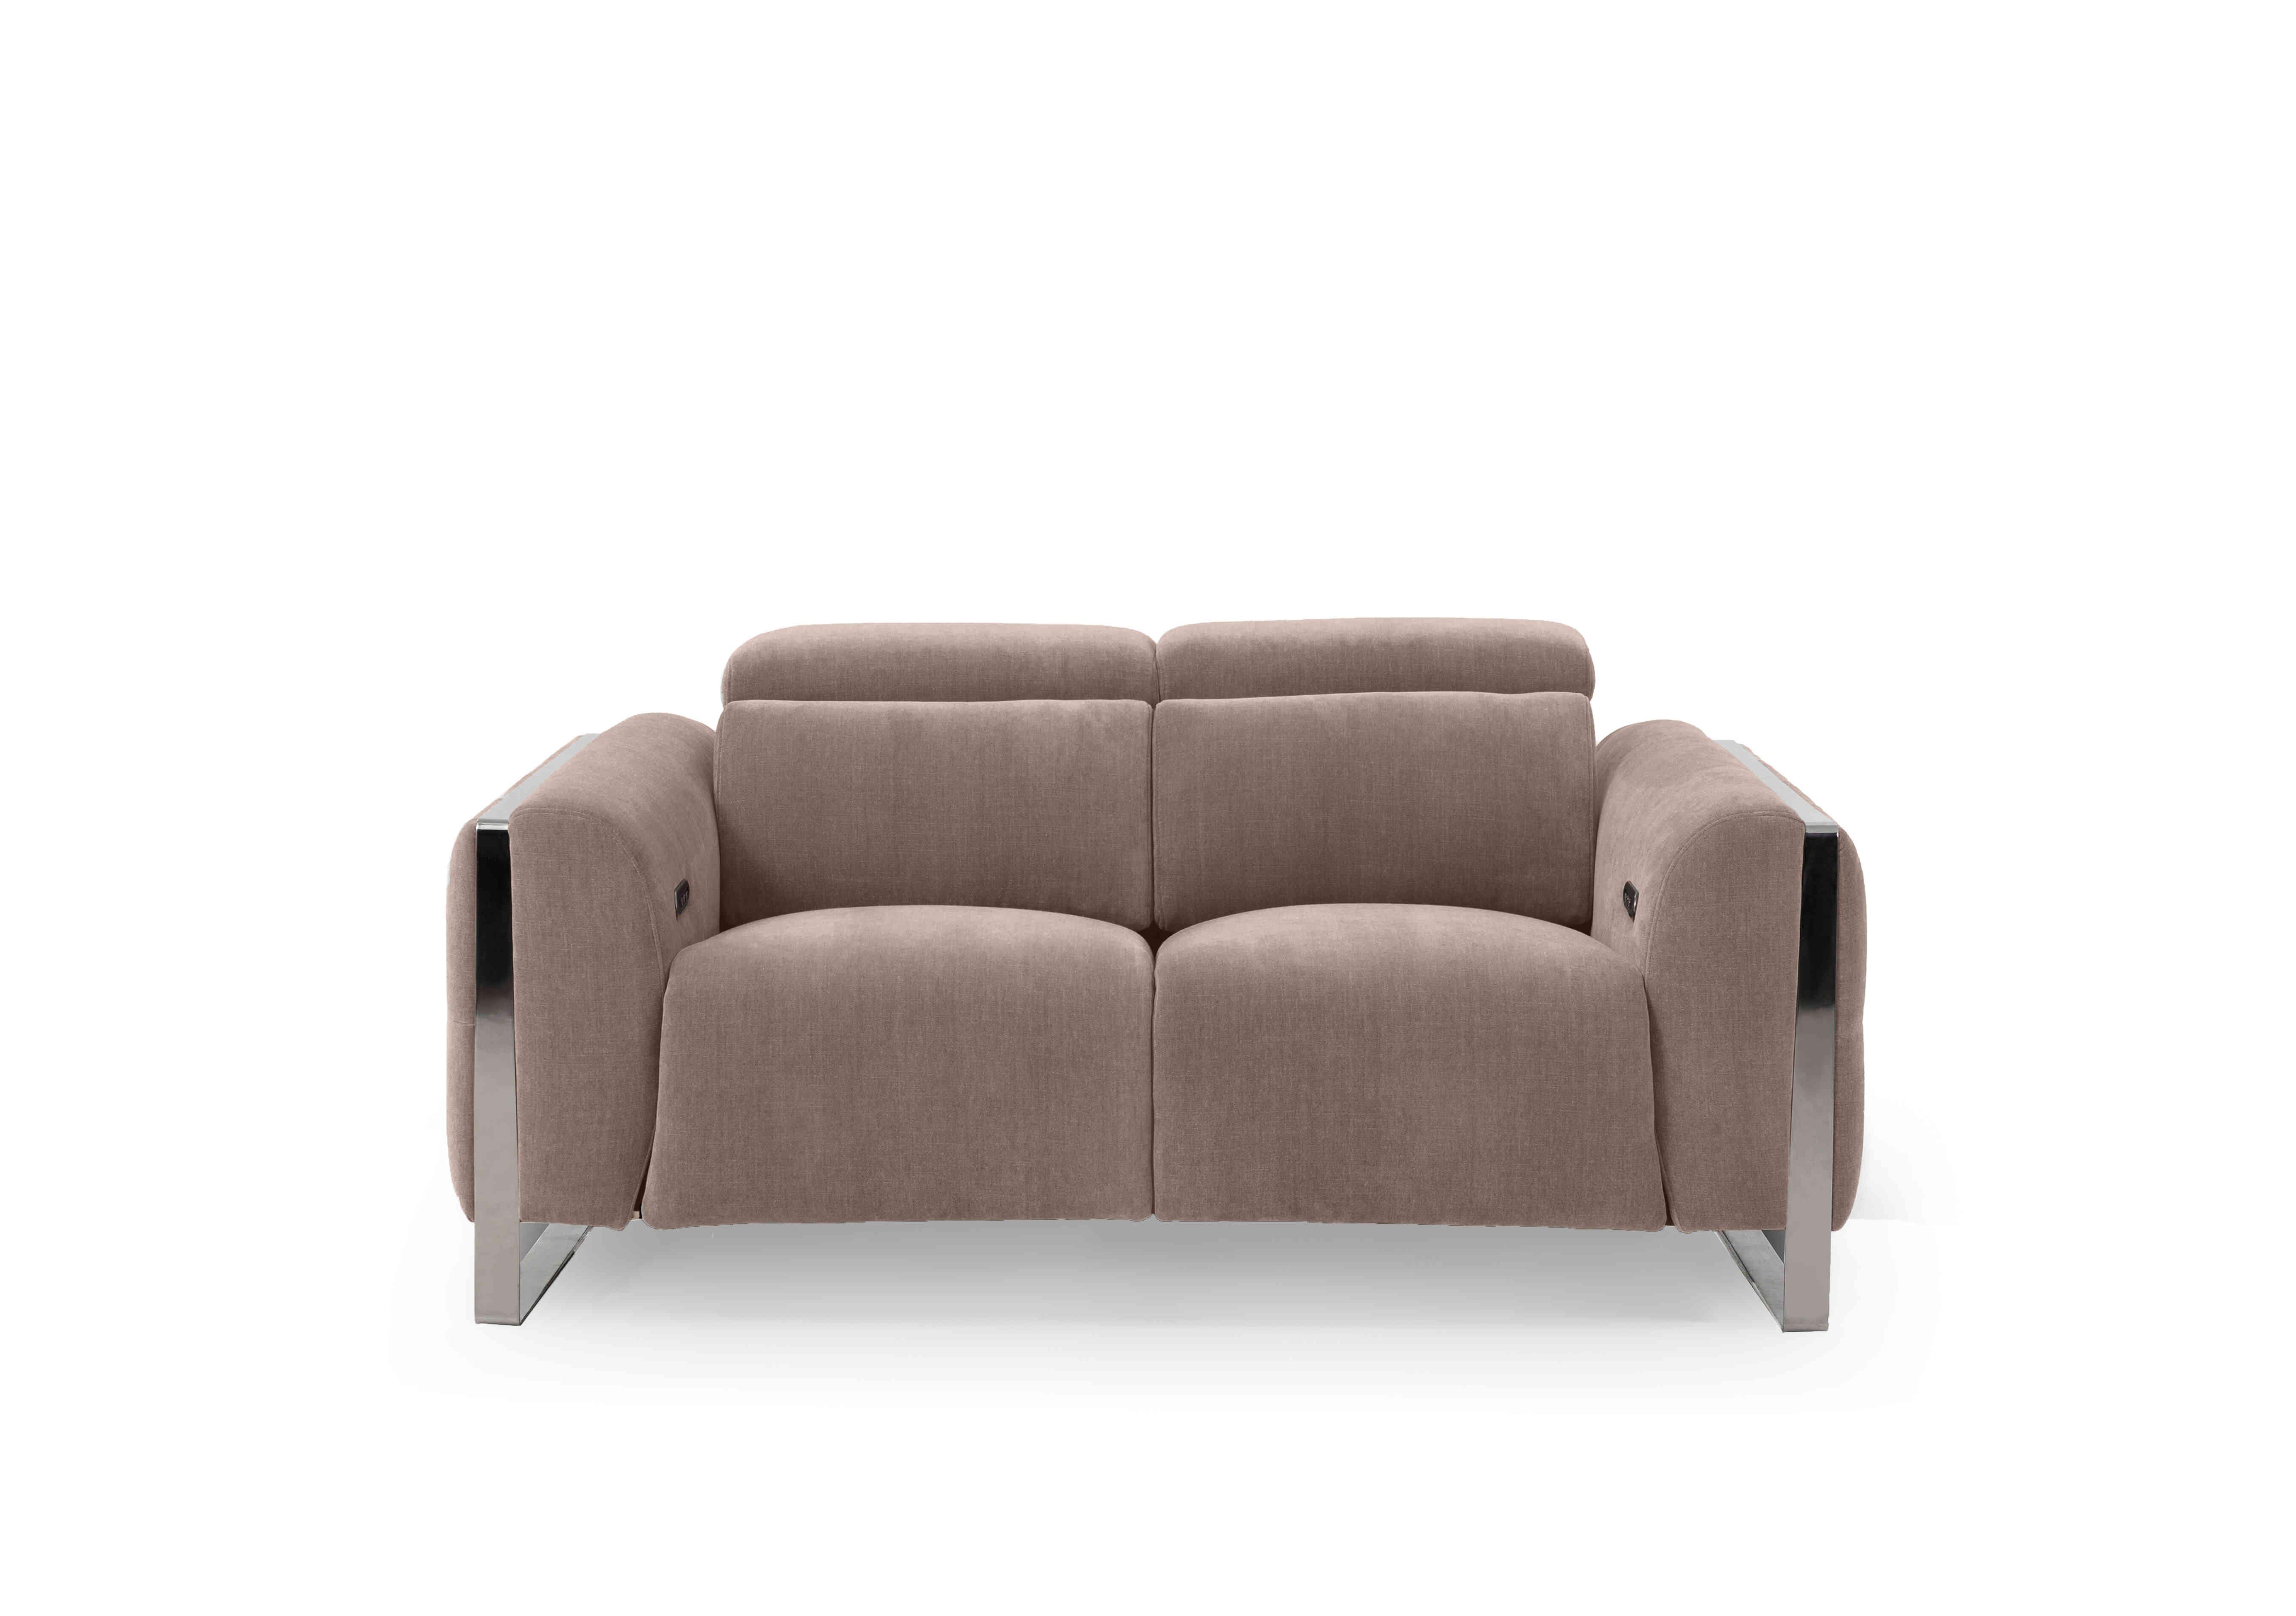 Gisella Fabric 2 Seater Sofa in Manhattan Nutmeg 58005 on Furniture Village